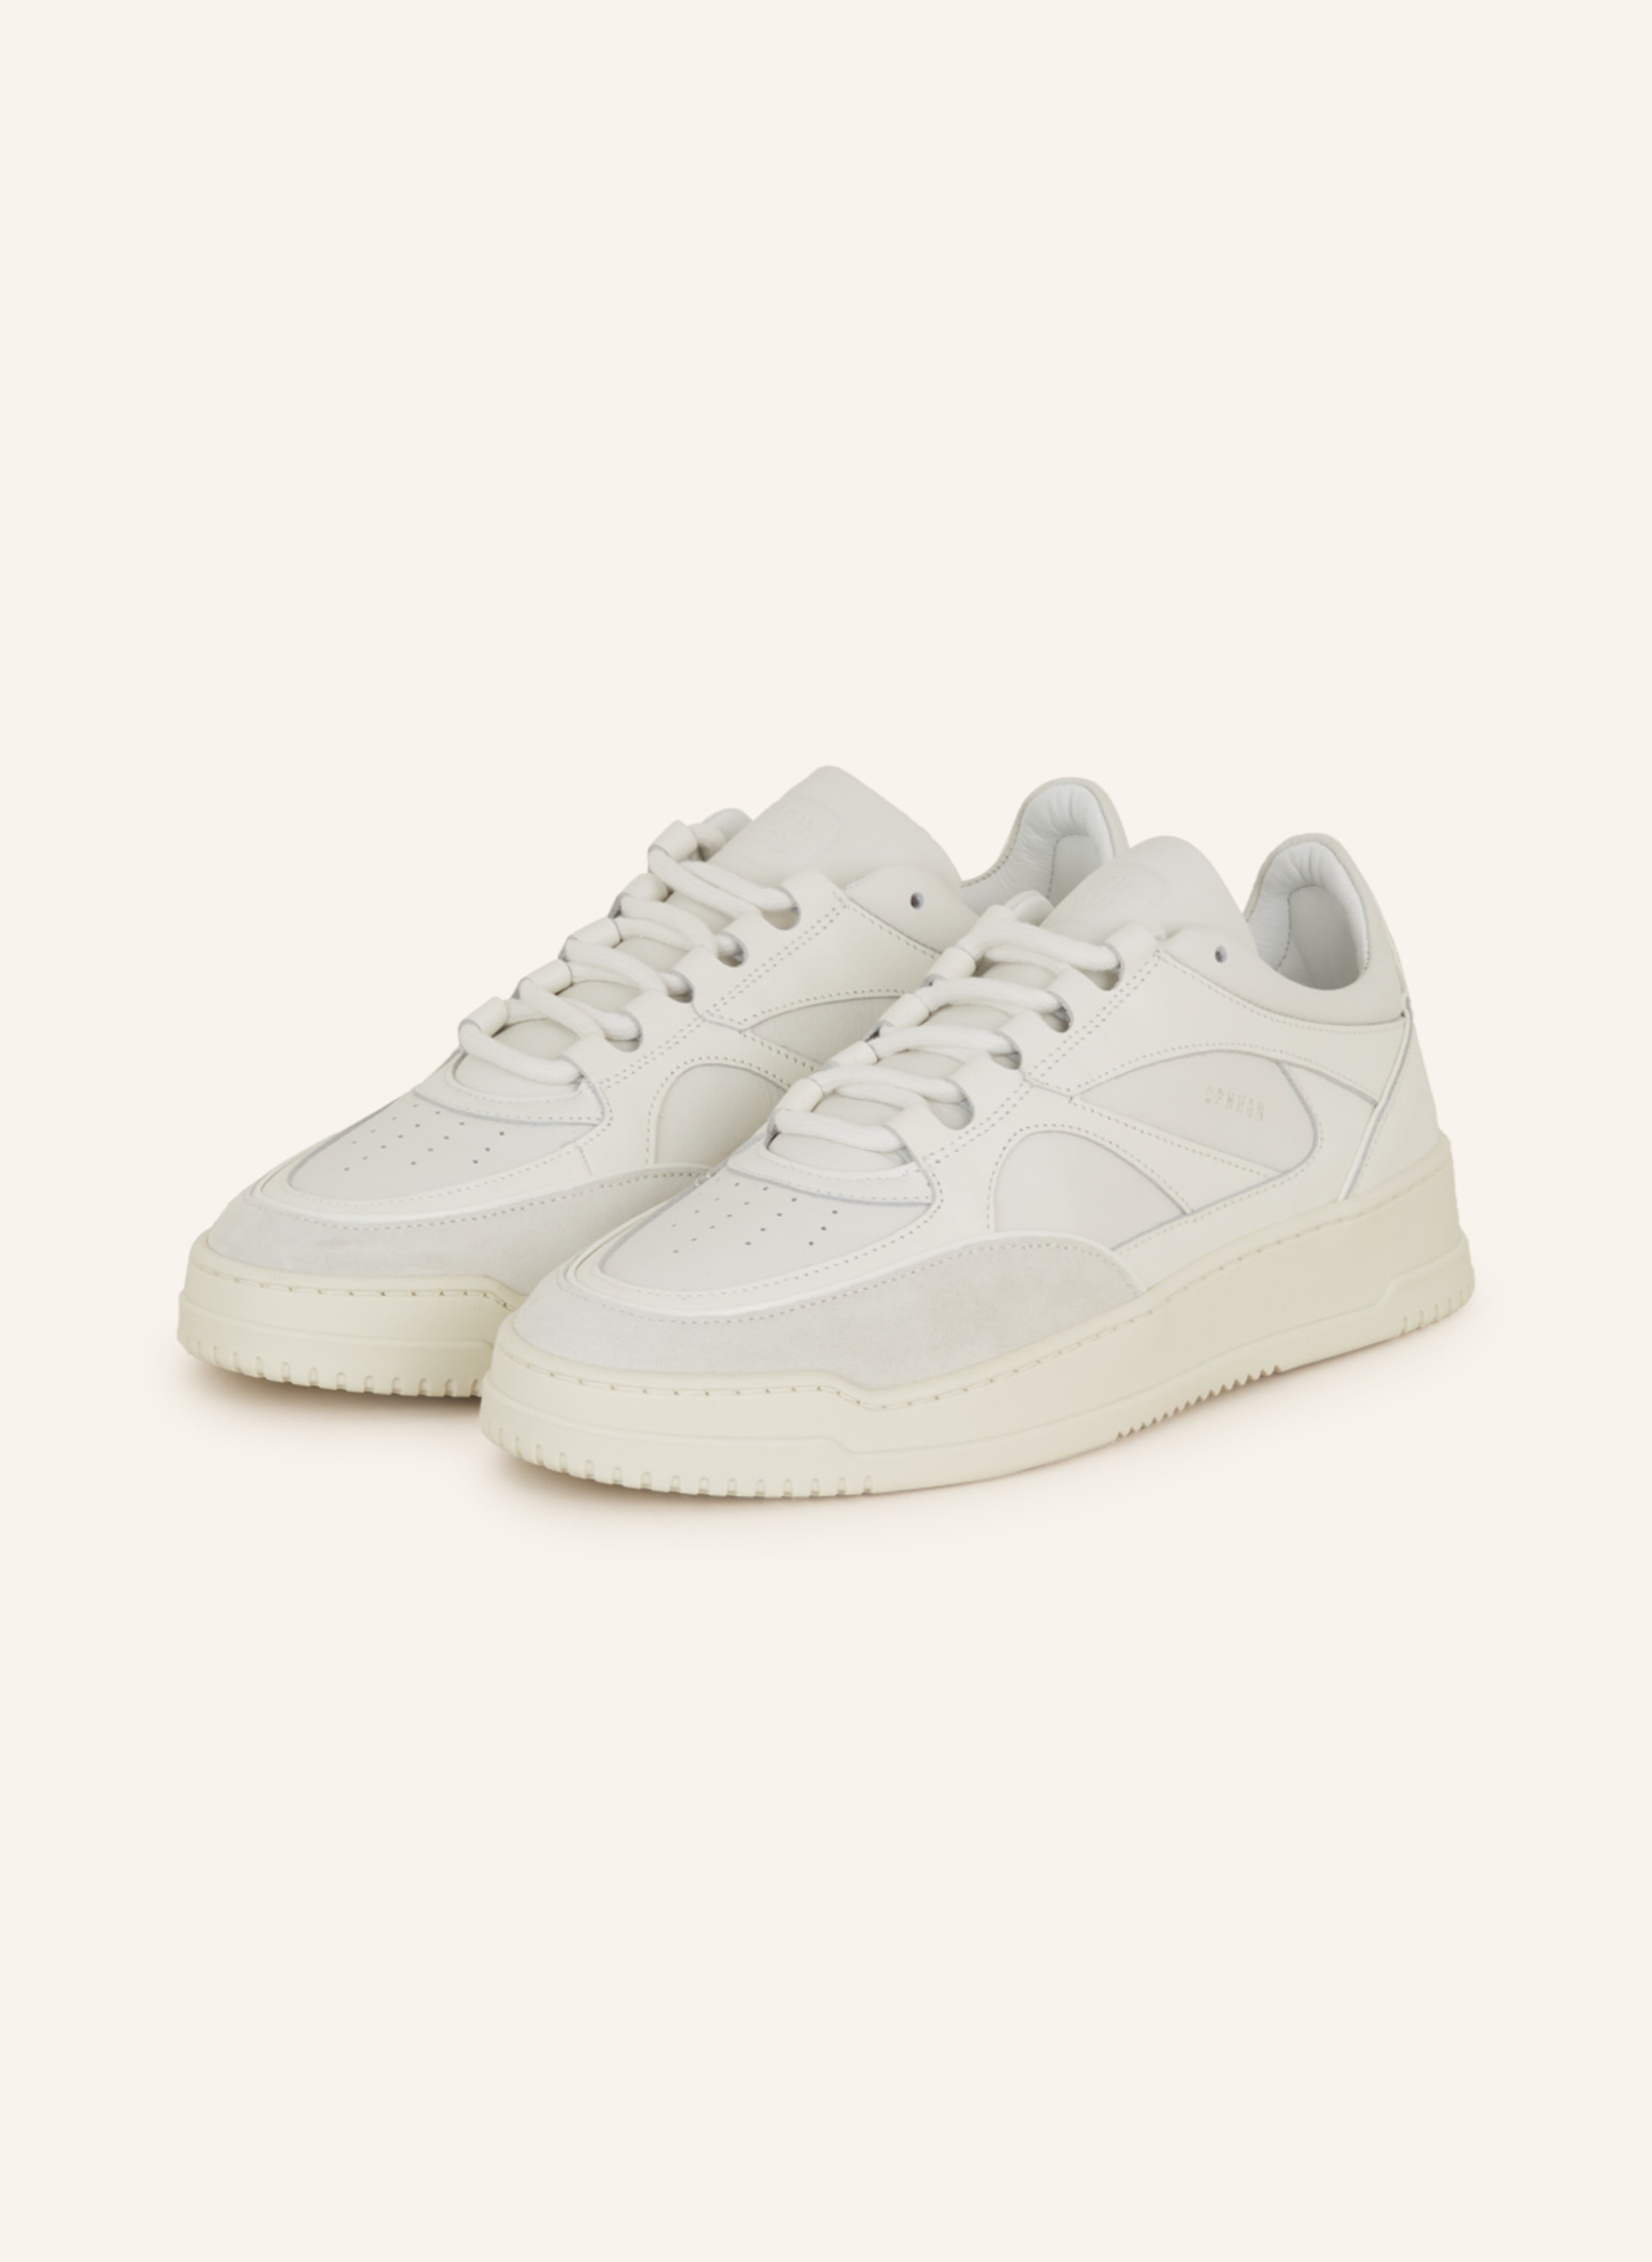 COPENHAGEN Sneakers CPH154 in white | Breuninger